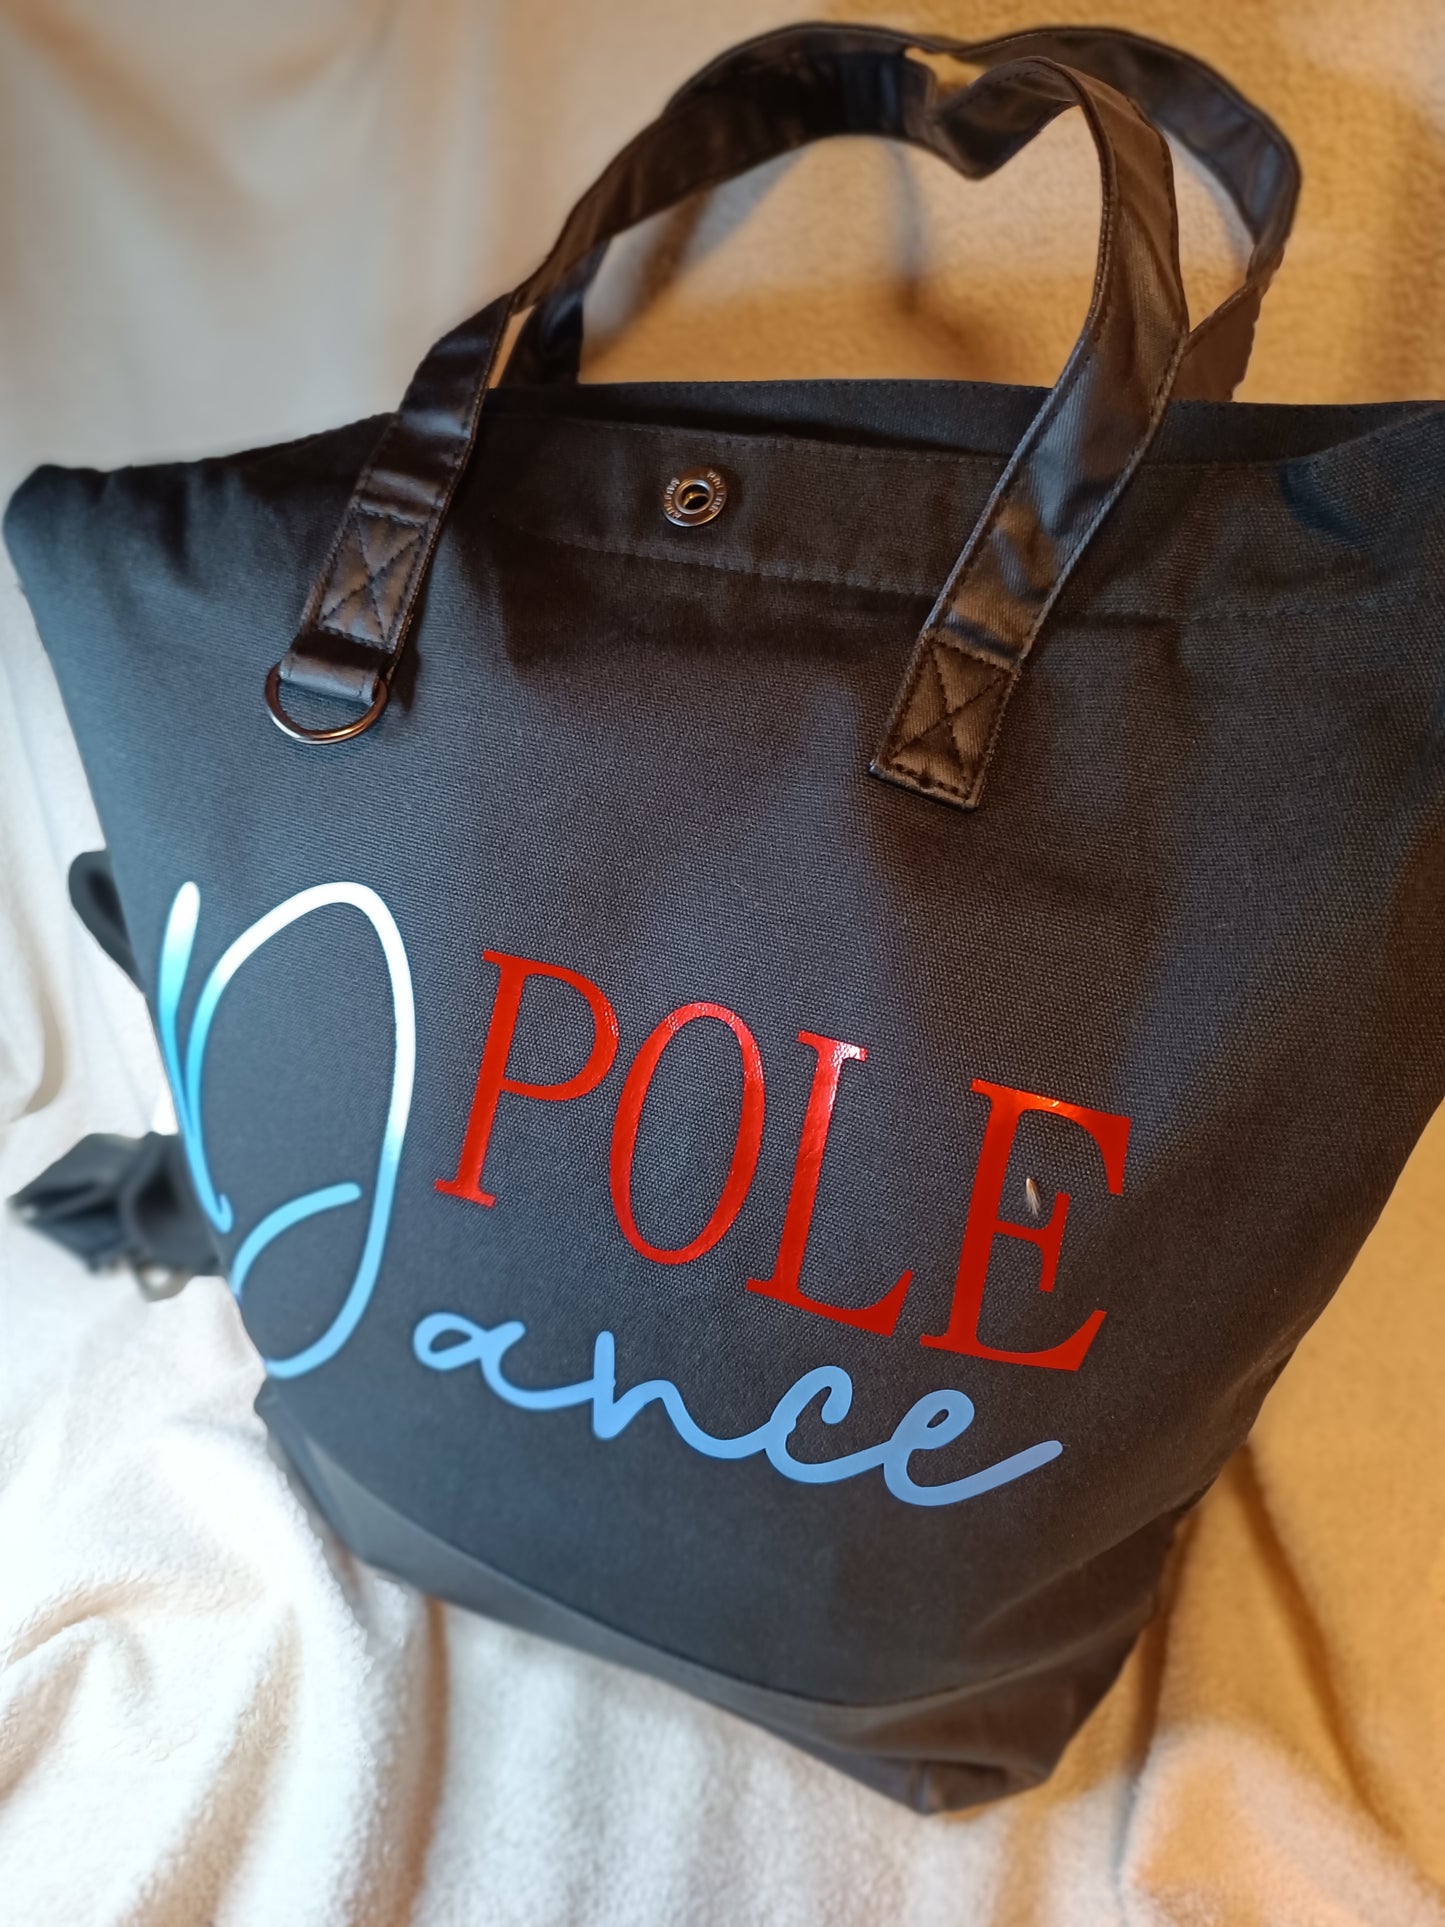 Pole Dance Shoppers | Pole dance bag